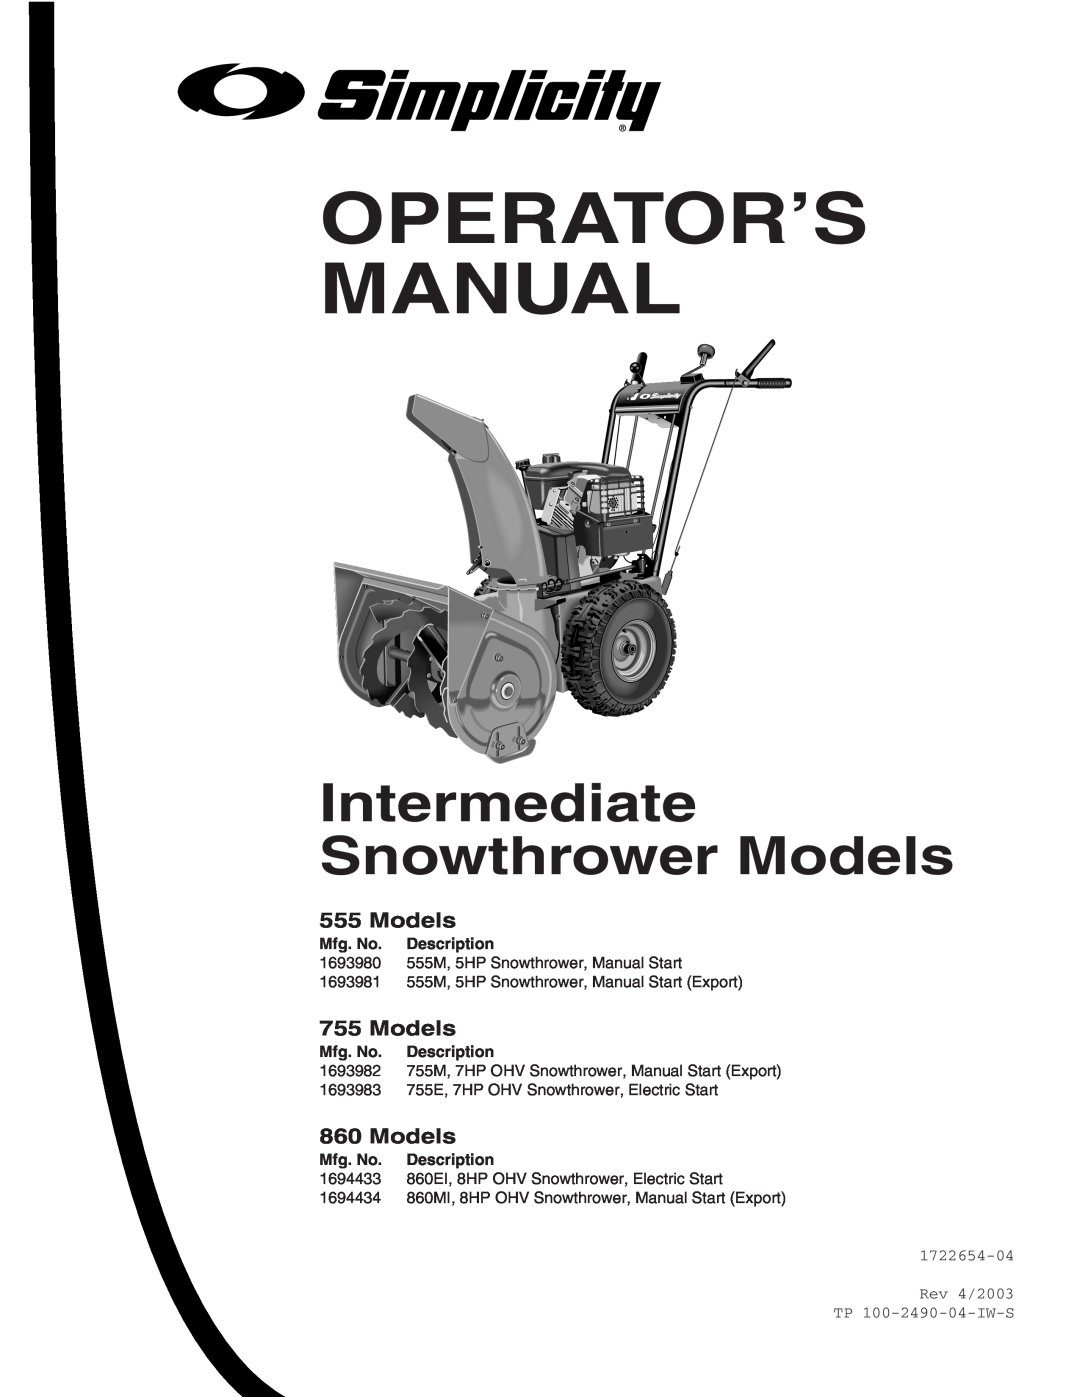 Simplicity 1694434, 755, 555, 1694433 Operator’S Manual, Intermediate Snowthrower Models, Mfg. No. Description 